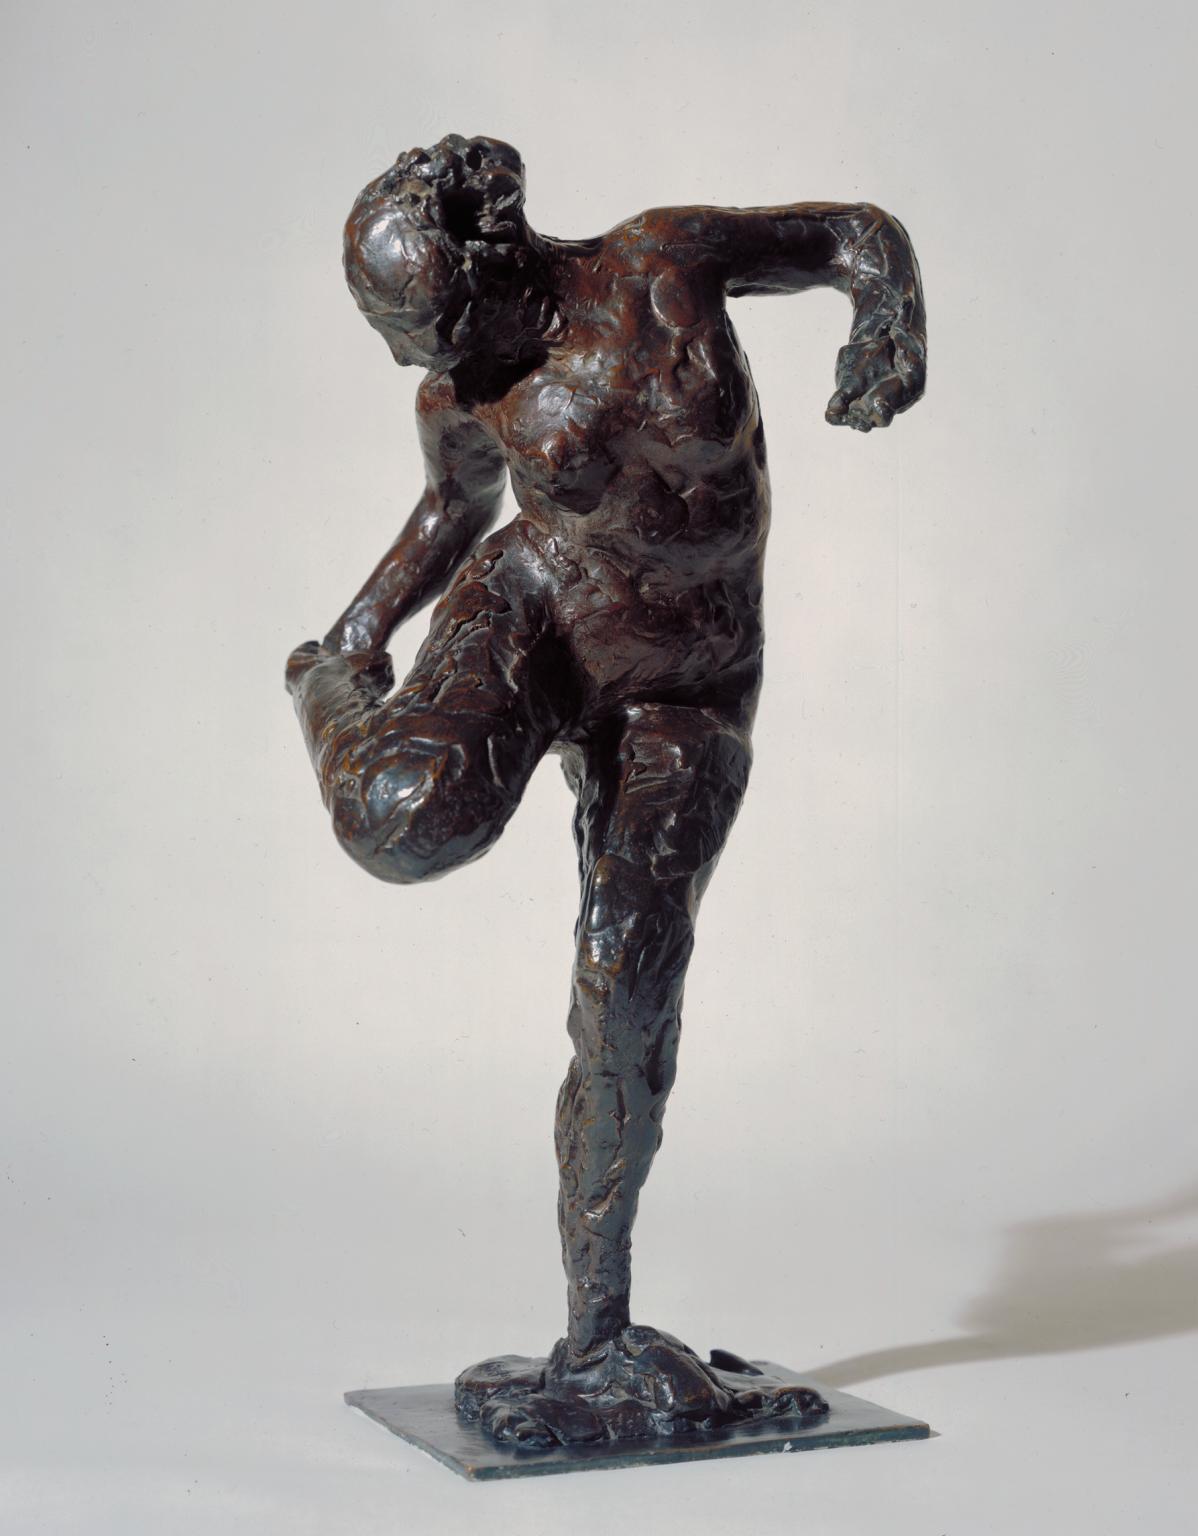 Ballerina in Pose on Points Bronze Sculpture 